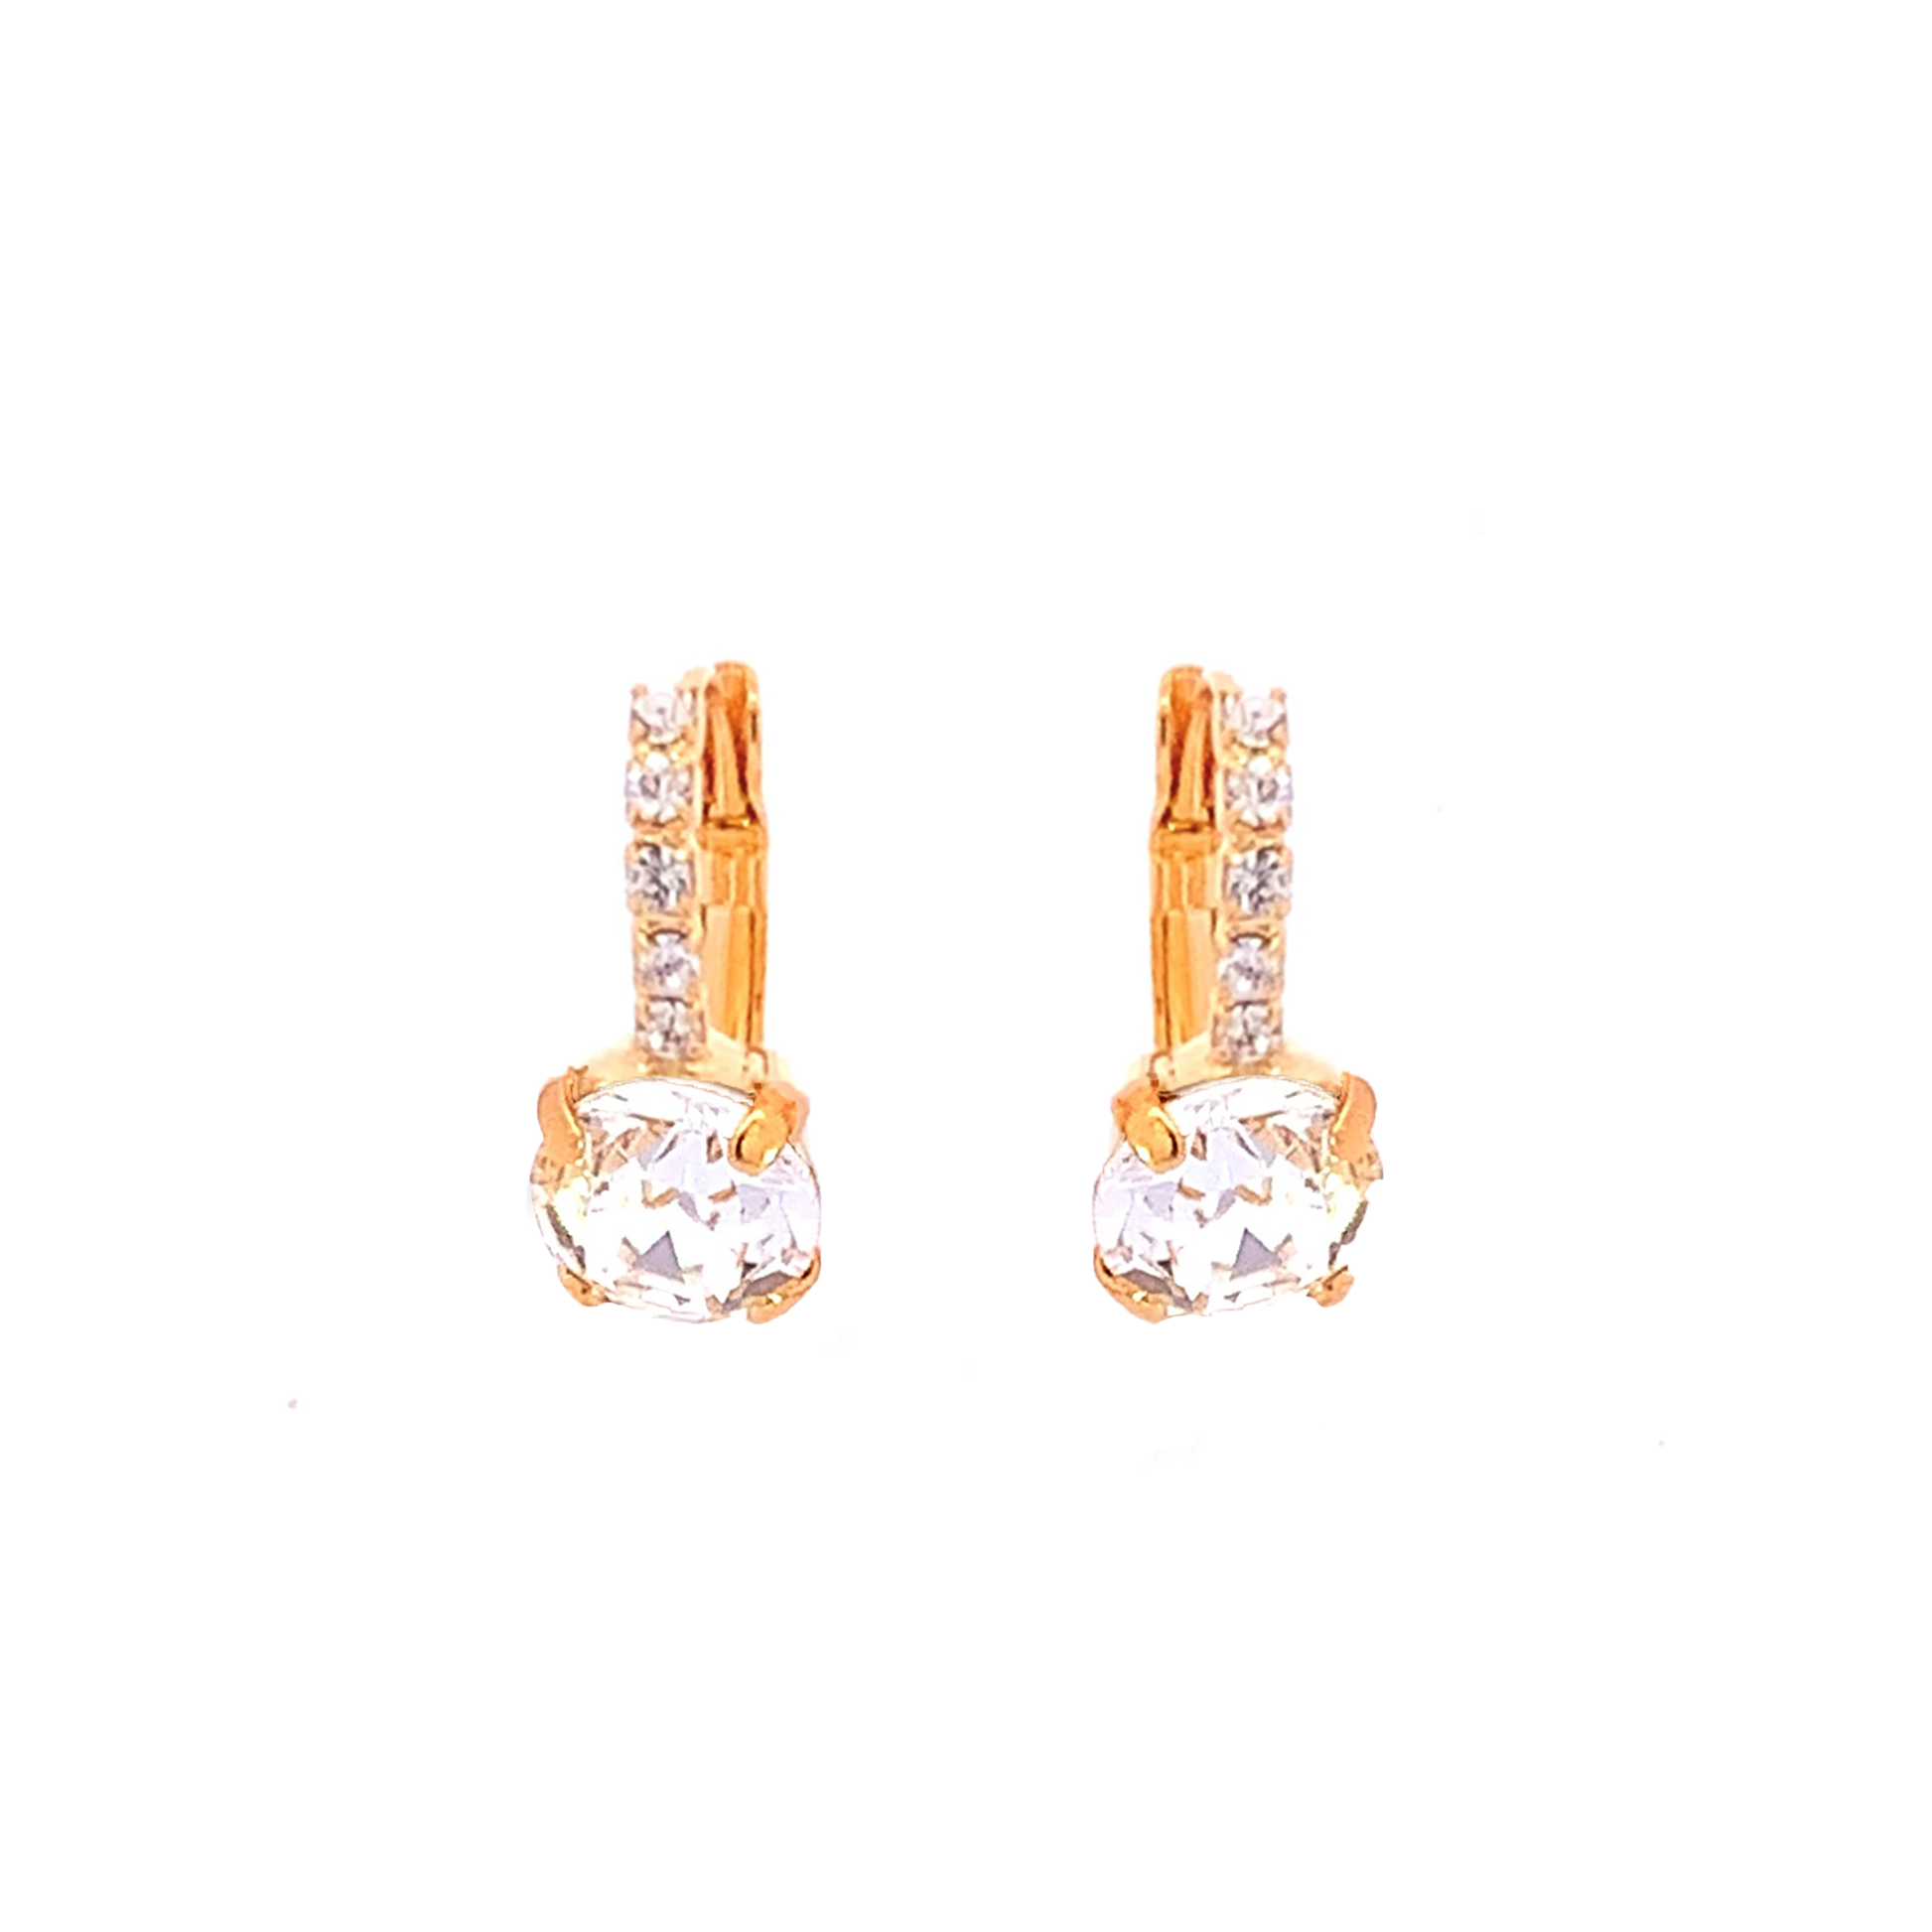 Simulated diamond pave bridesmaid earrings gold